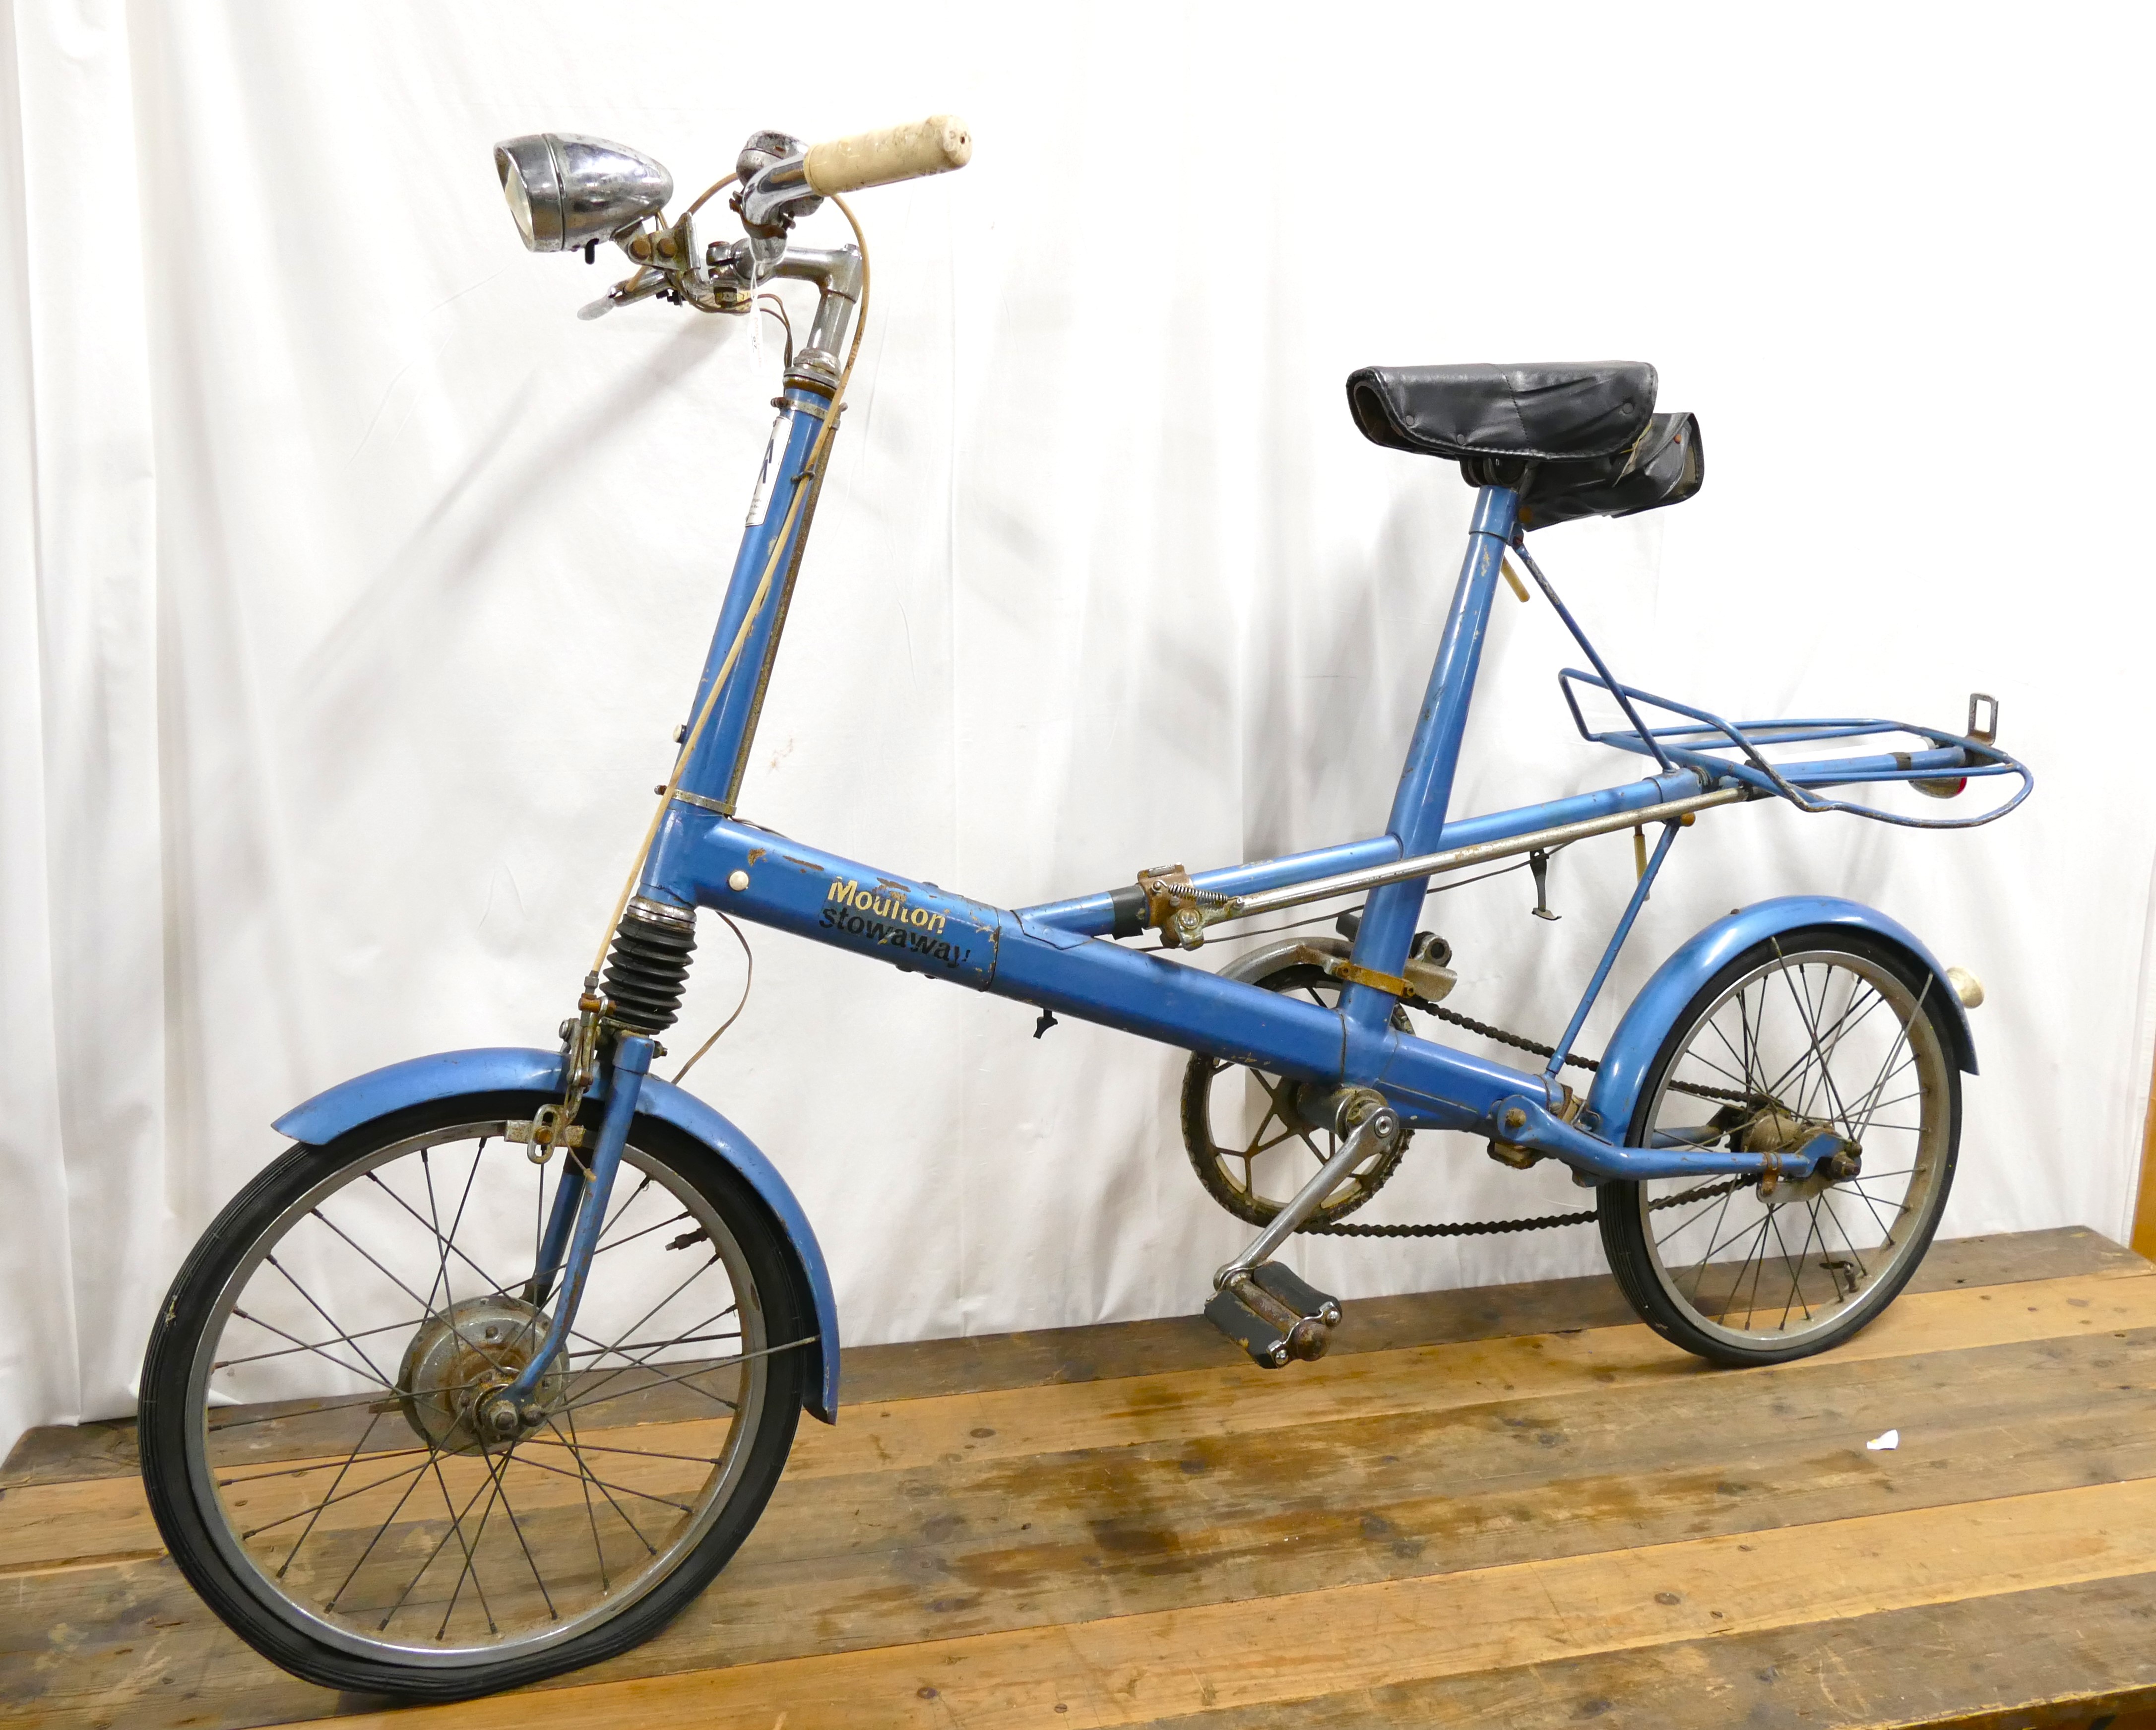 Moulton Stowaway 1960's folding bicycle